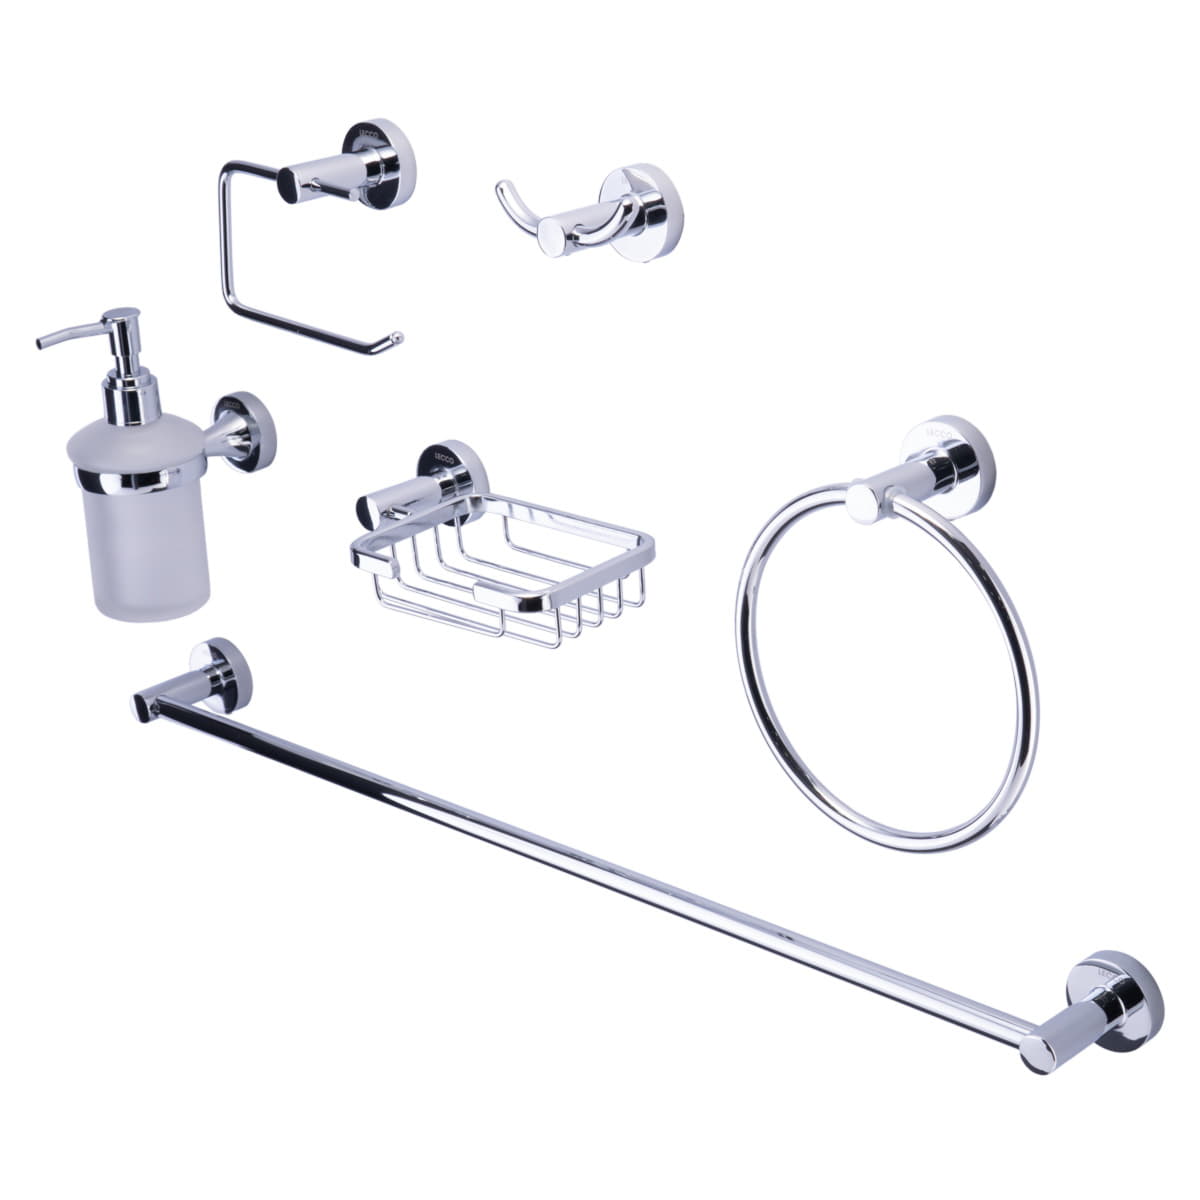 Kit de accesorios para baño Capri x 6 piezas